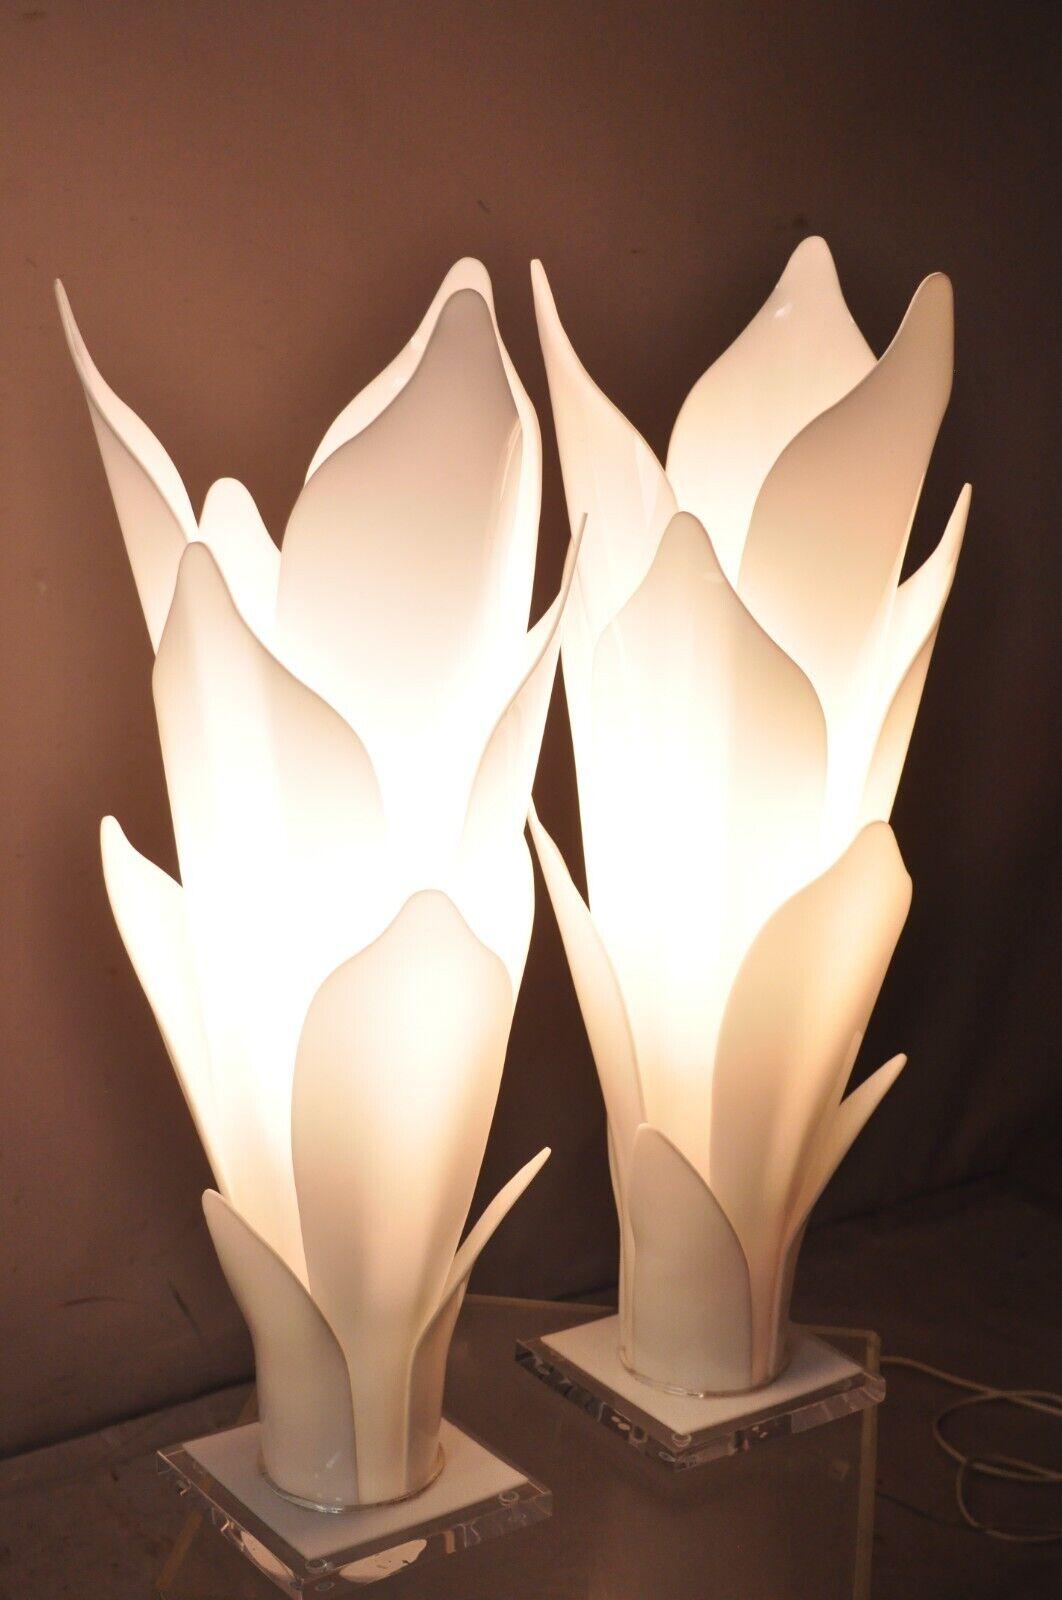 Rougier White Acrylic Lucite Tulip Flower Leaf Mid Century Table Lamps - a Pair. Circa 1970s. Measurements: 29